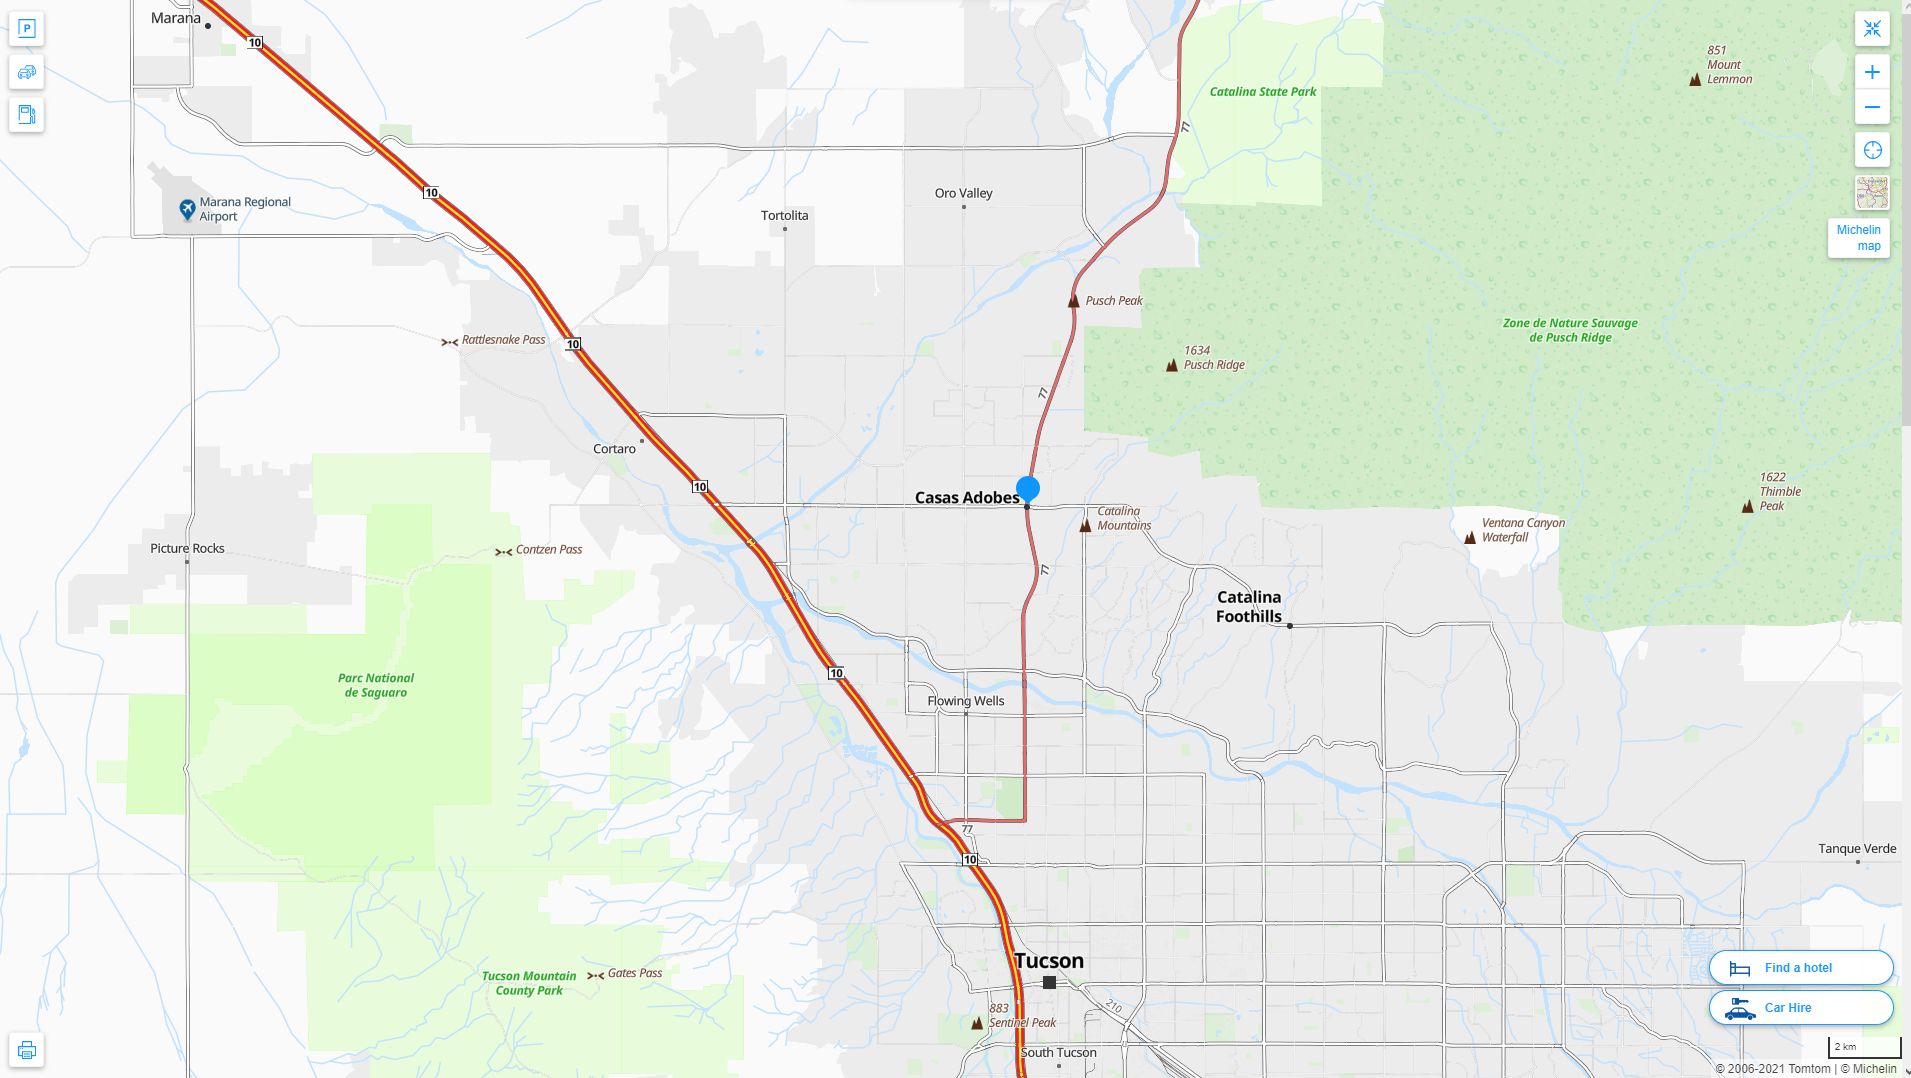 Casas Adobes Arizona Highway and Road Map